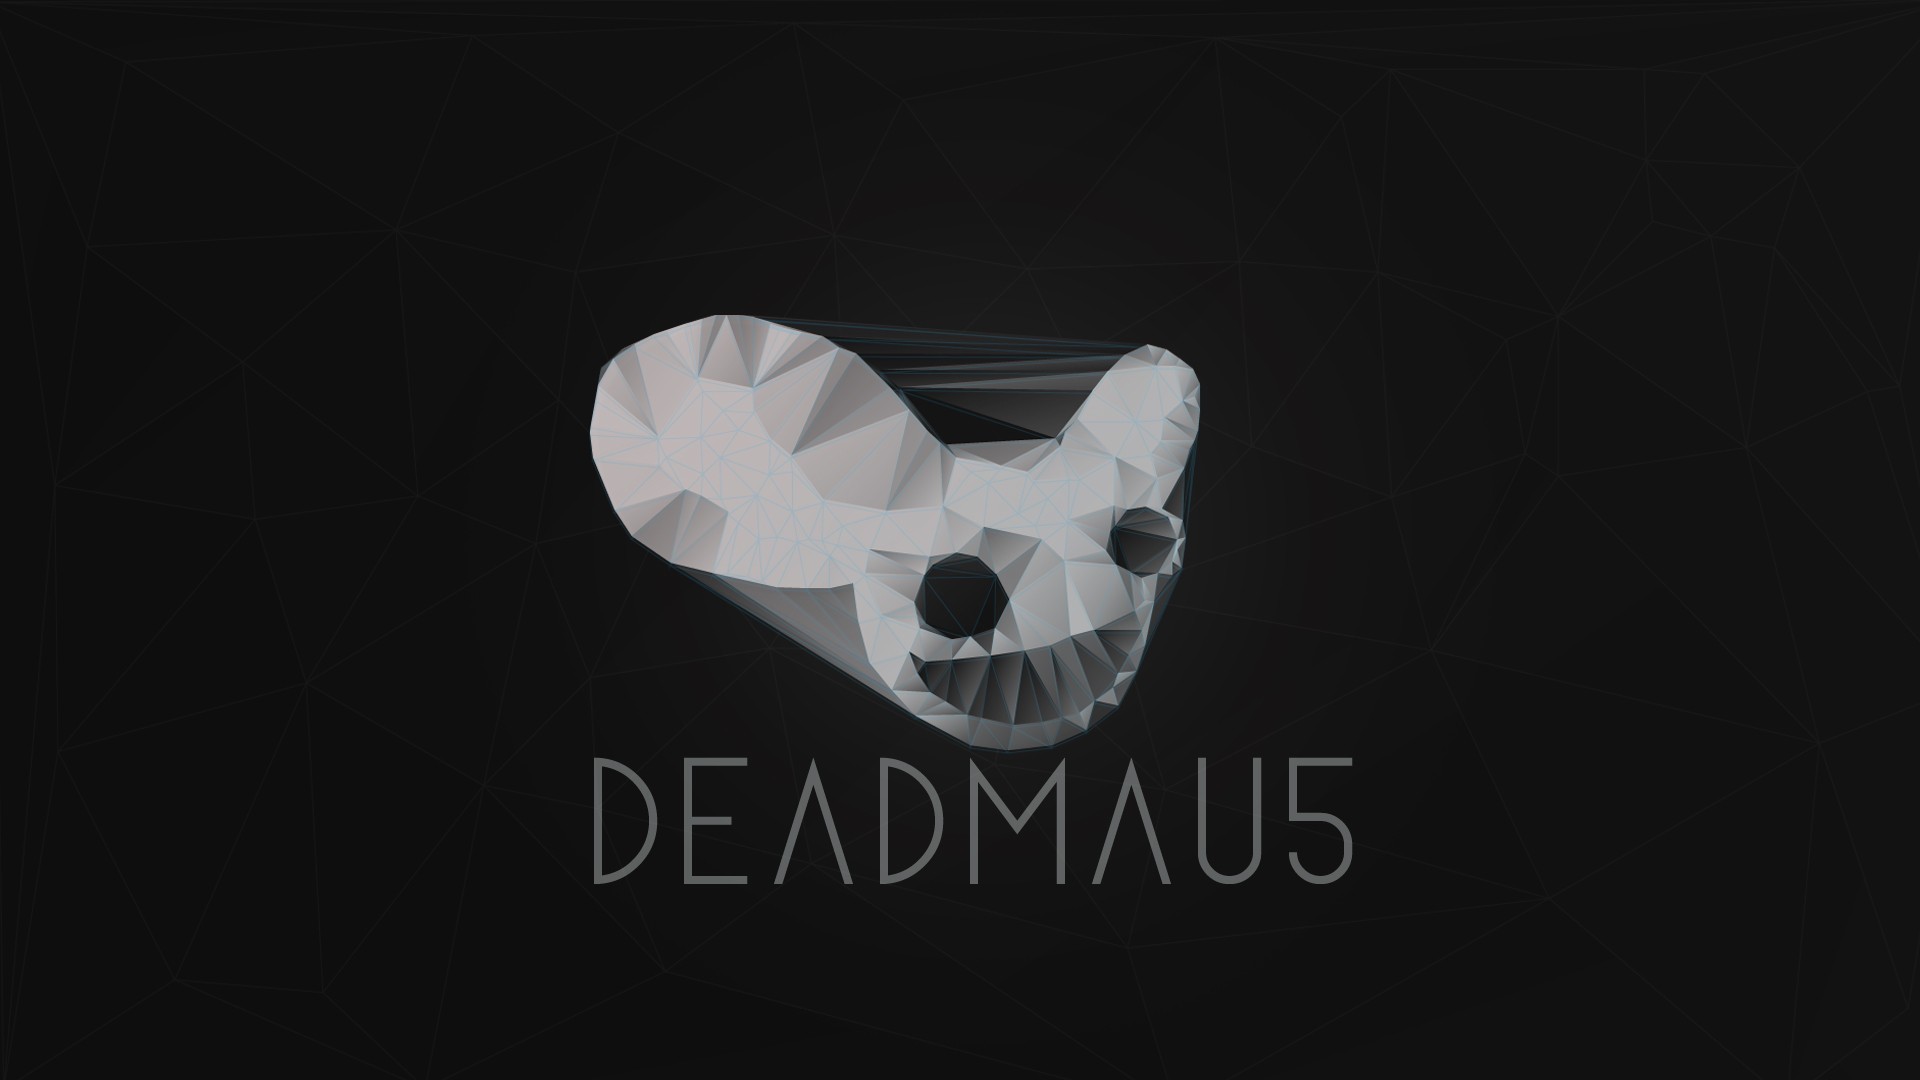 General 1920x1080 Deadmau5 music electronic music digital art simple background black background